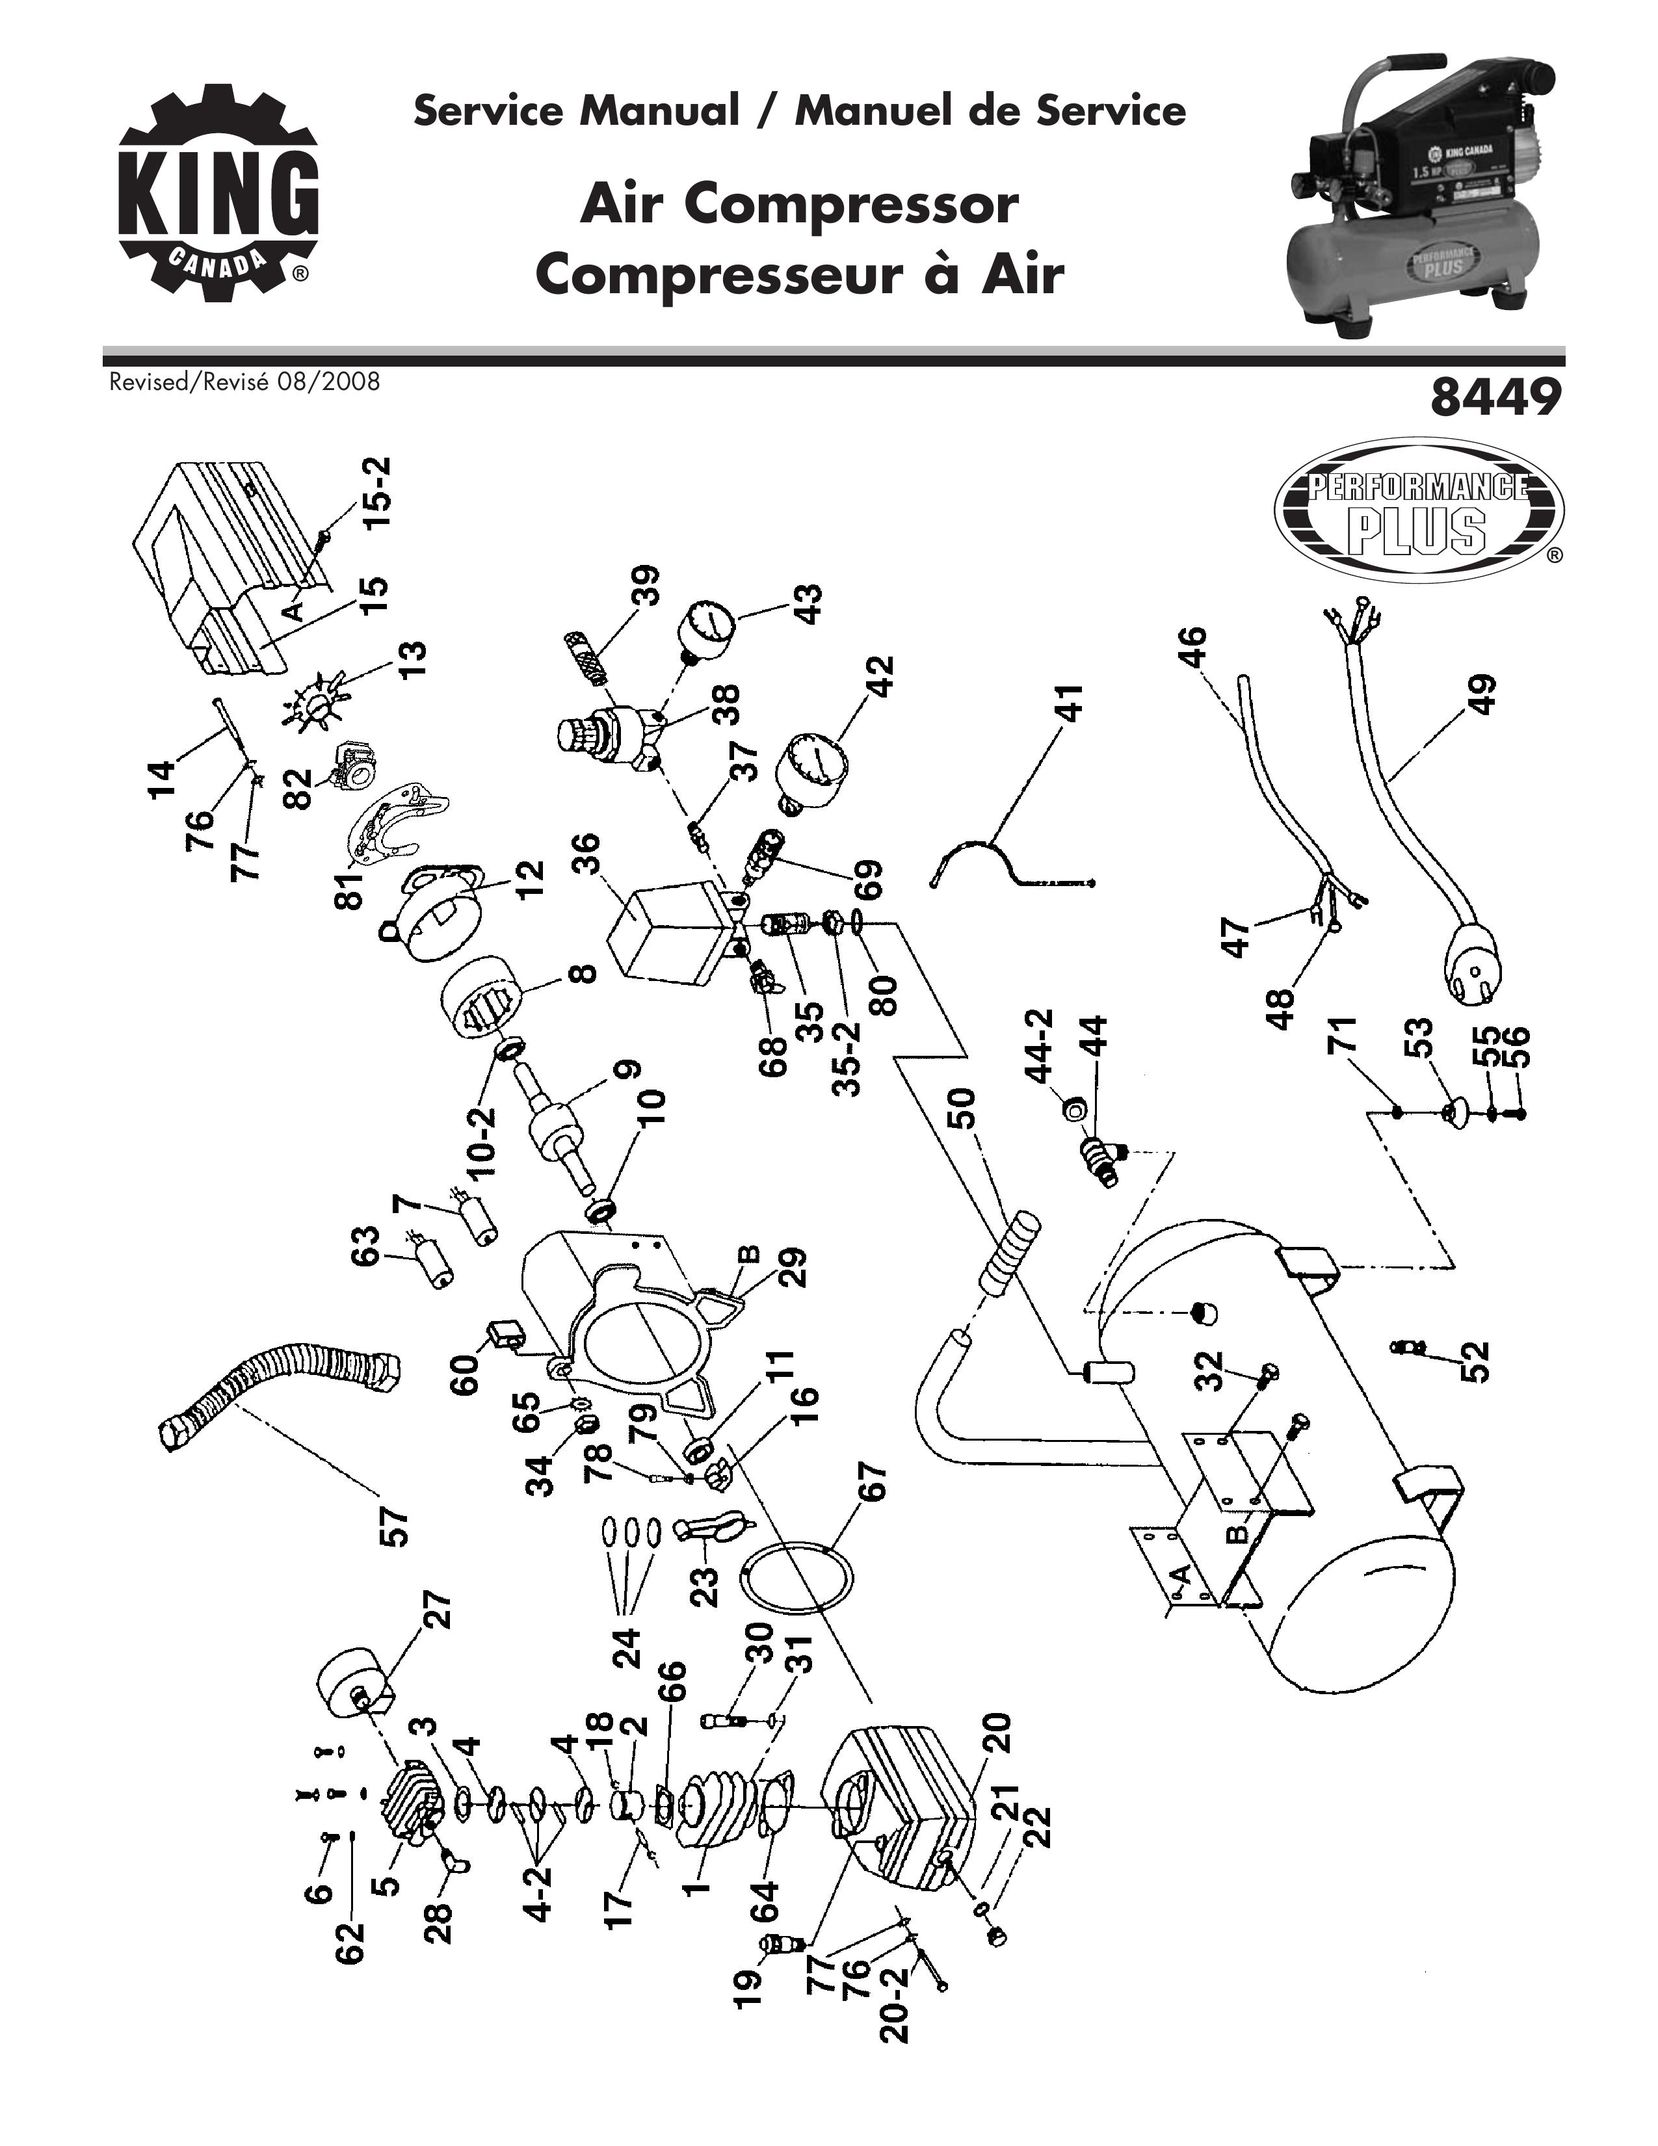 King Canada 8449 Air Compressor User Manual